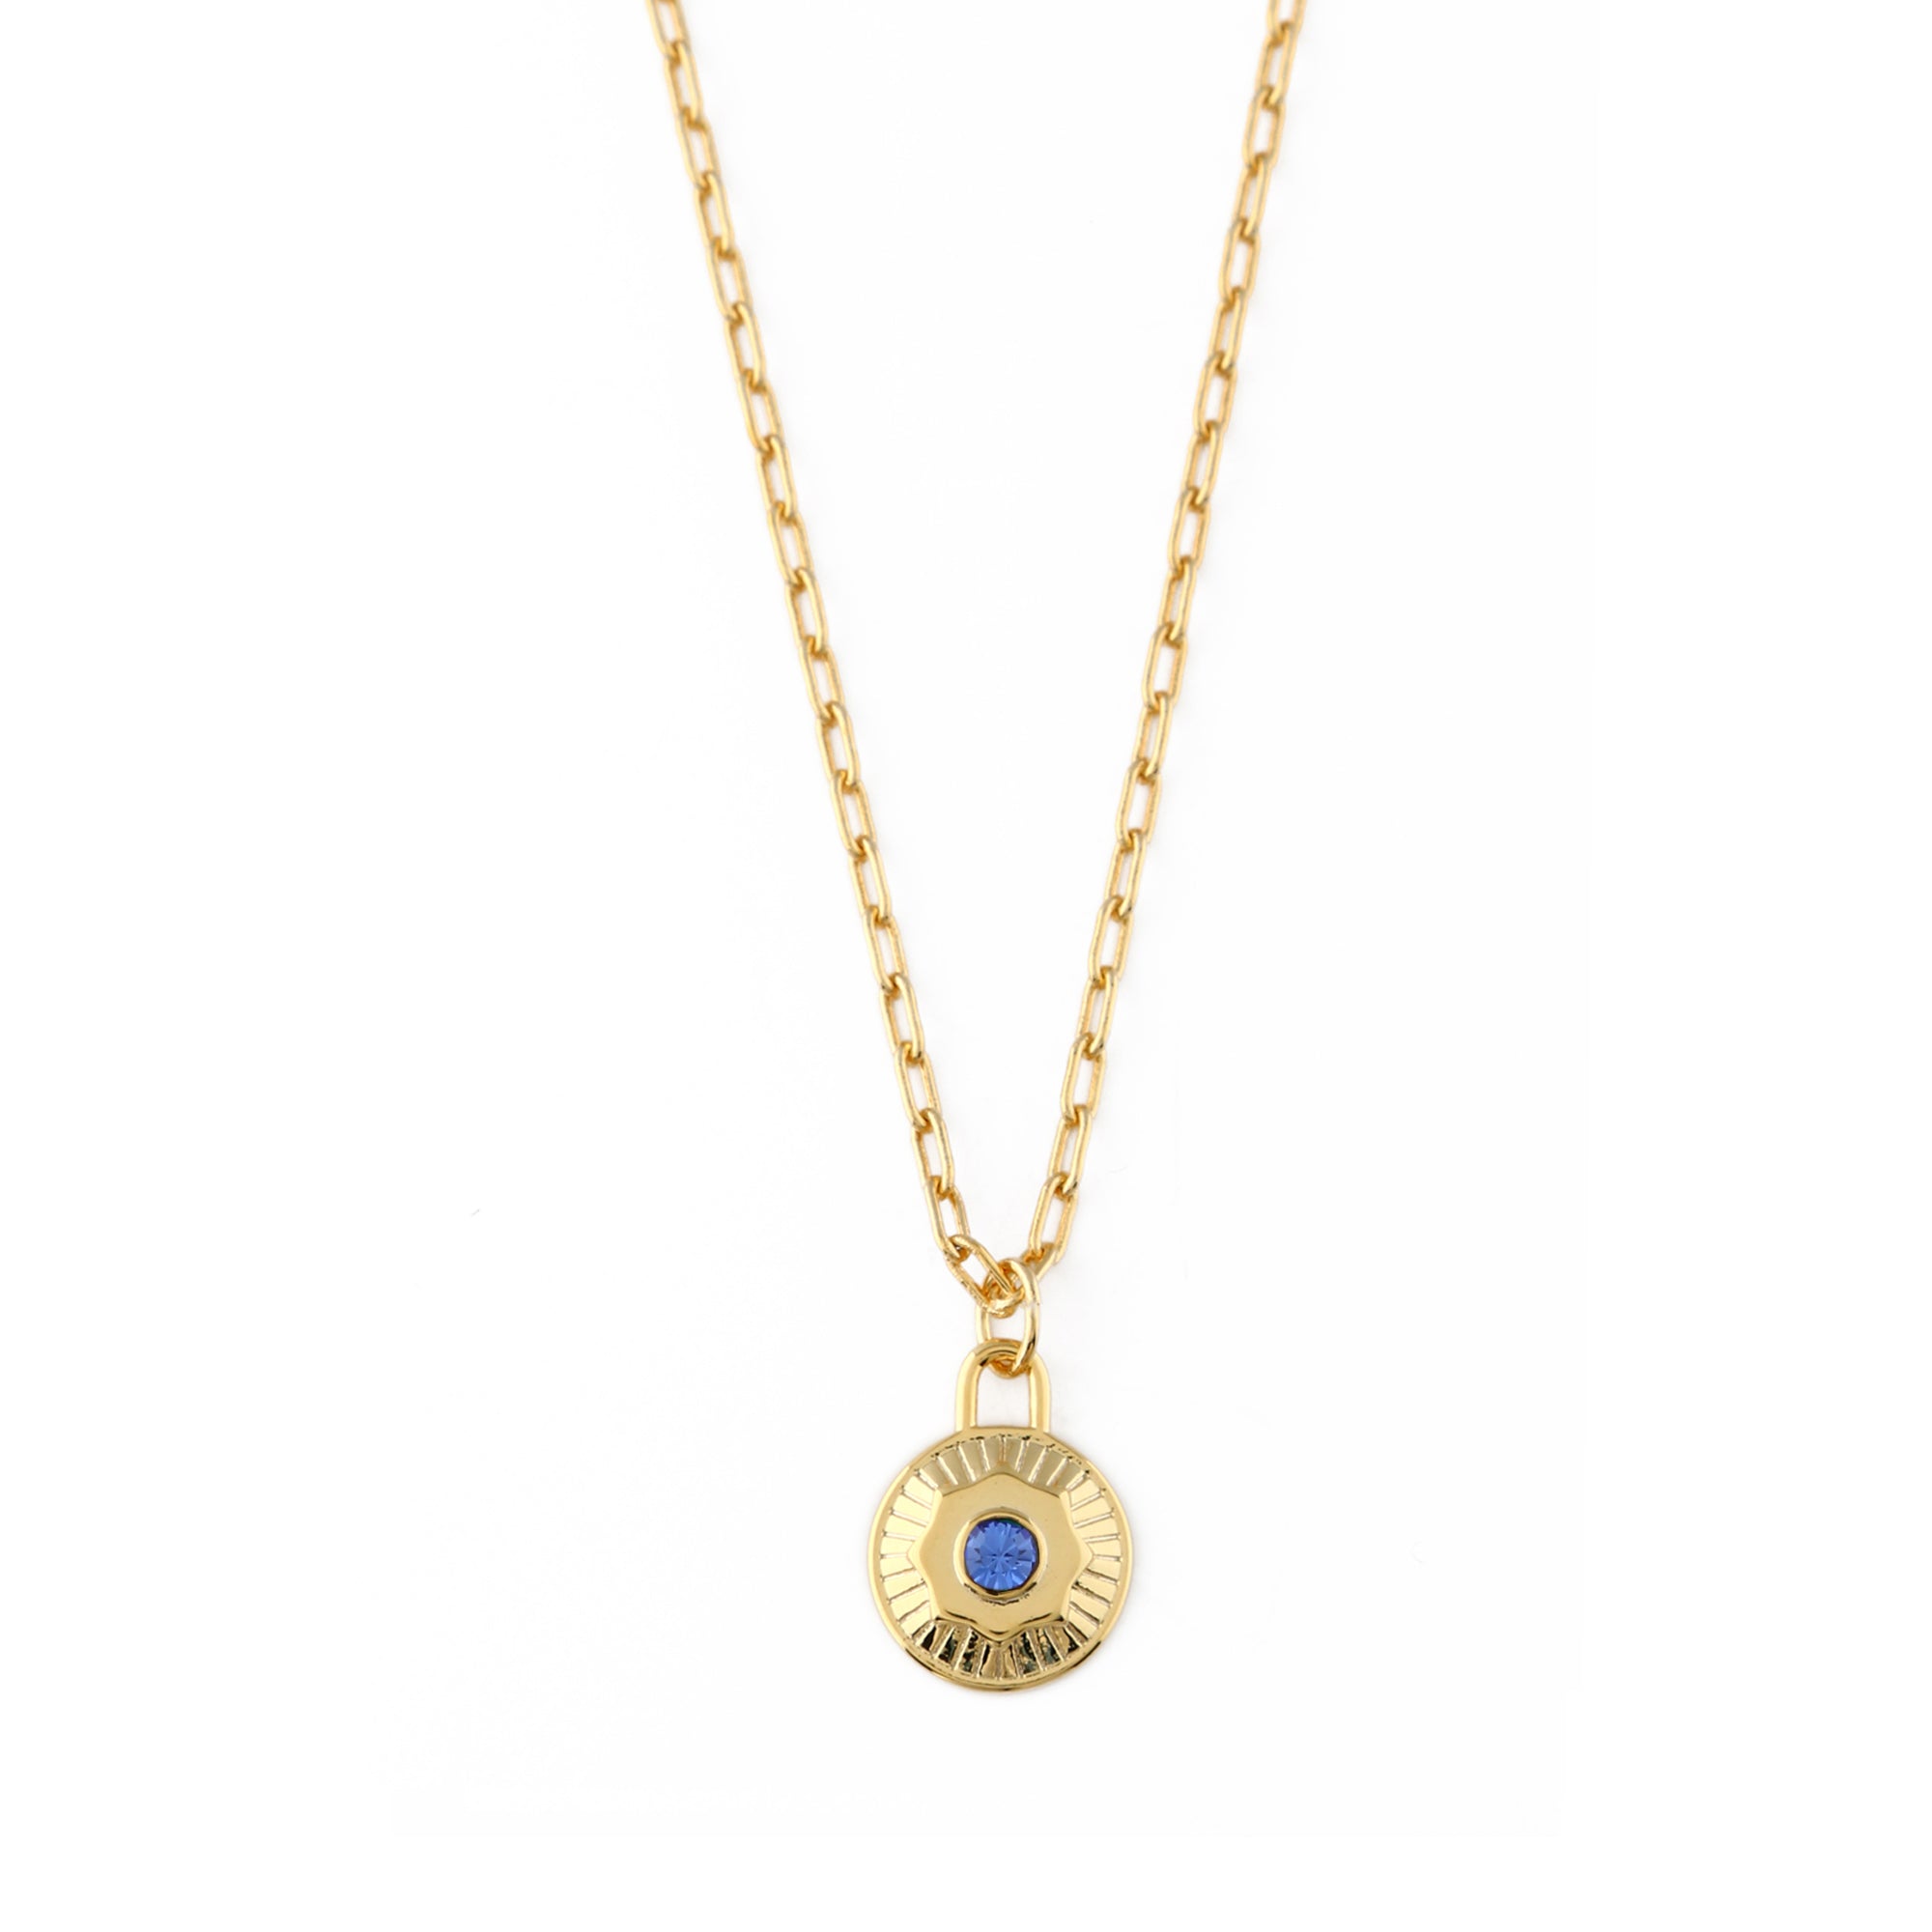 September Birthstone Necklace Made With Swarovski Crystals - Gold - Orelia London